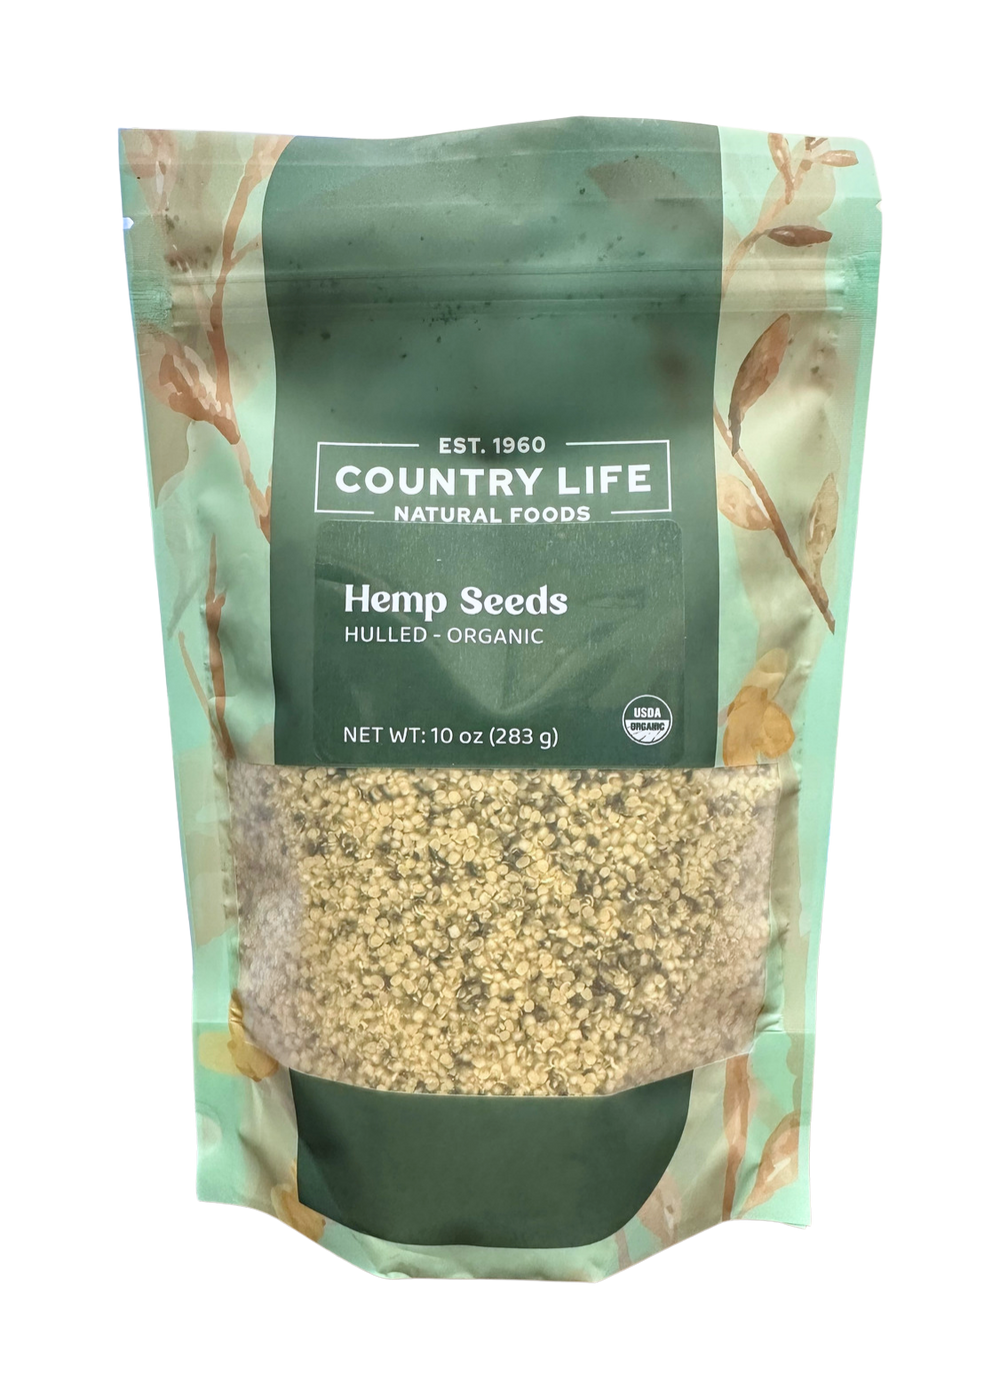 Hemp Seeds, Hulled (Organic) - Country Life Natural Foods